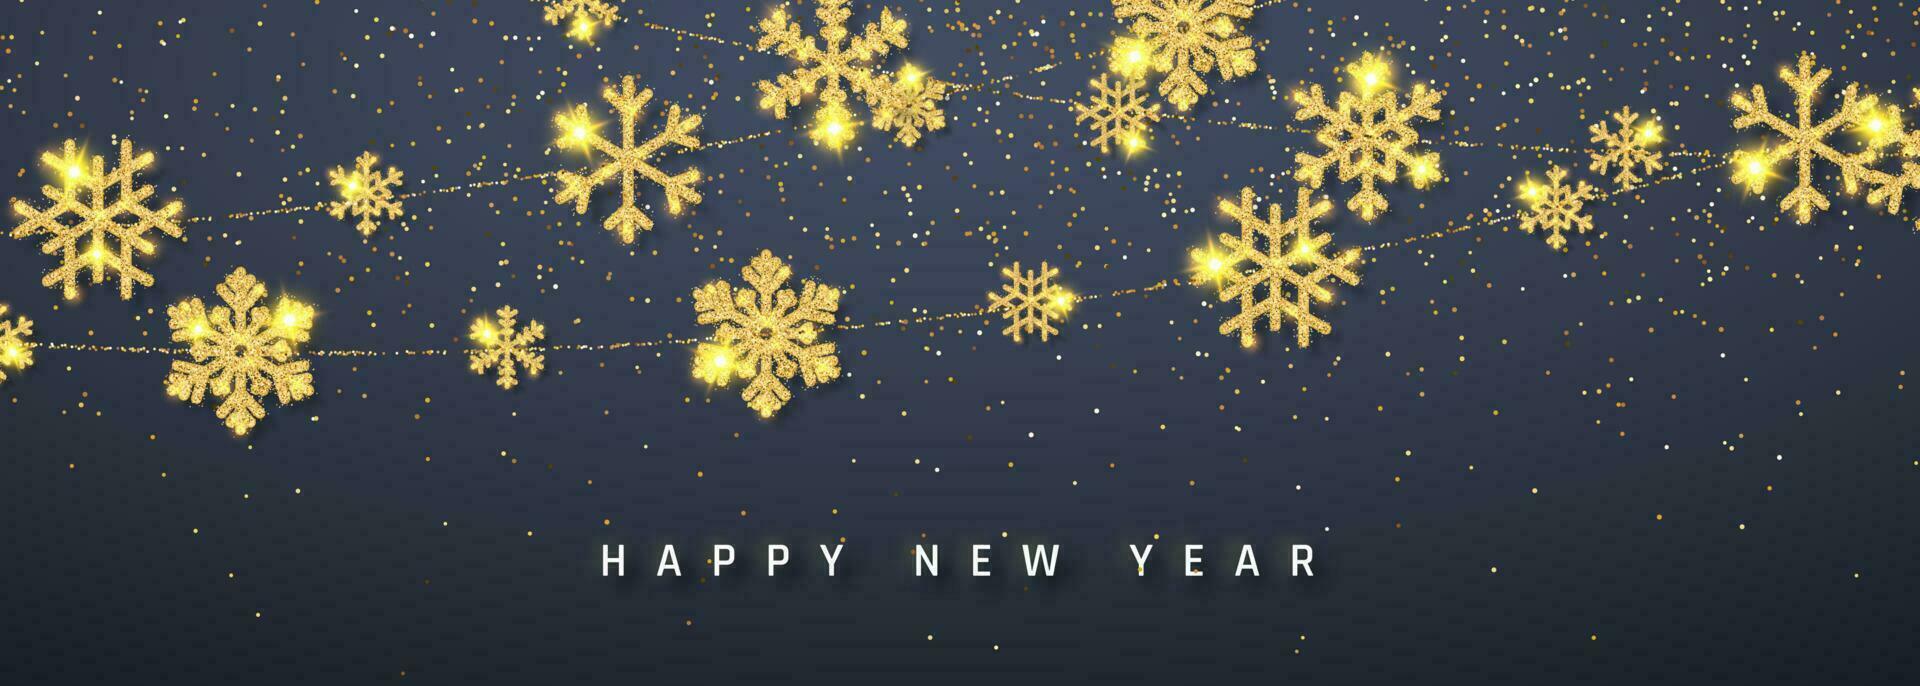 ny år lysande glitter lysande gyllene snöflinga dekoration krans på mörk bakgrund. hängande glitter snöflinga. vektor illustration